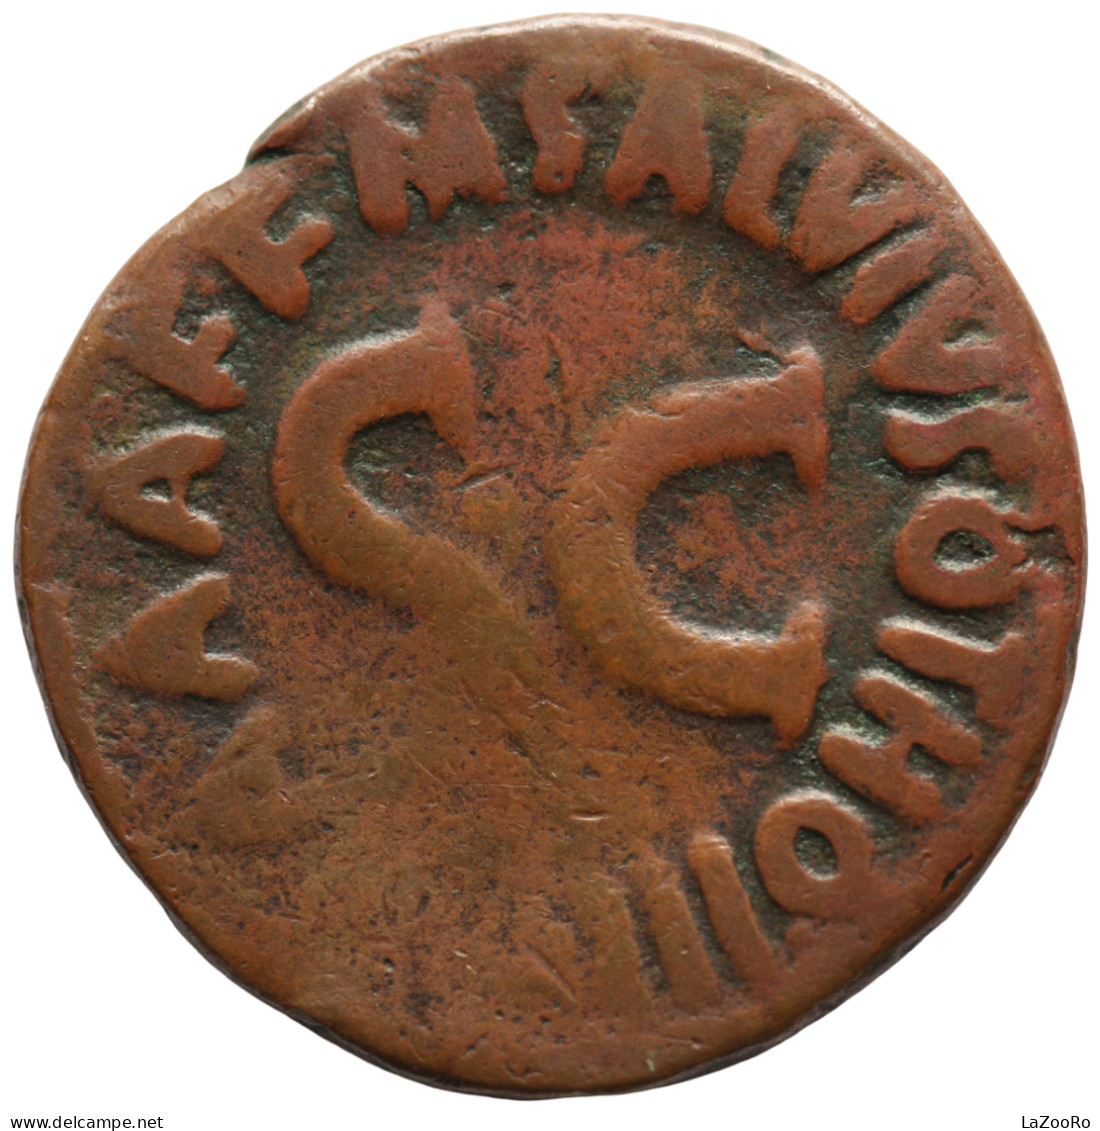 LaZooRo: Roman Empire - AE As Of Augustus (27 BC-AD 14), M. Salvius Otho, Moneyer - La Dinastía Julio-Claudia (-27 / 69)